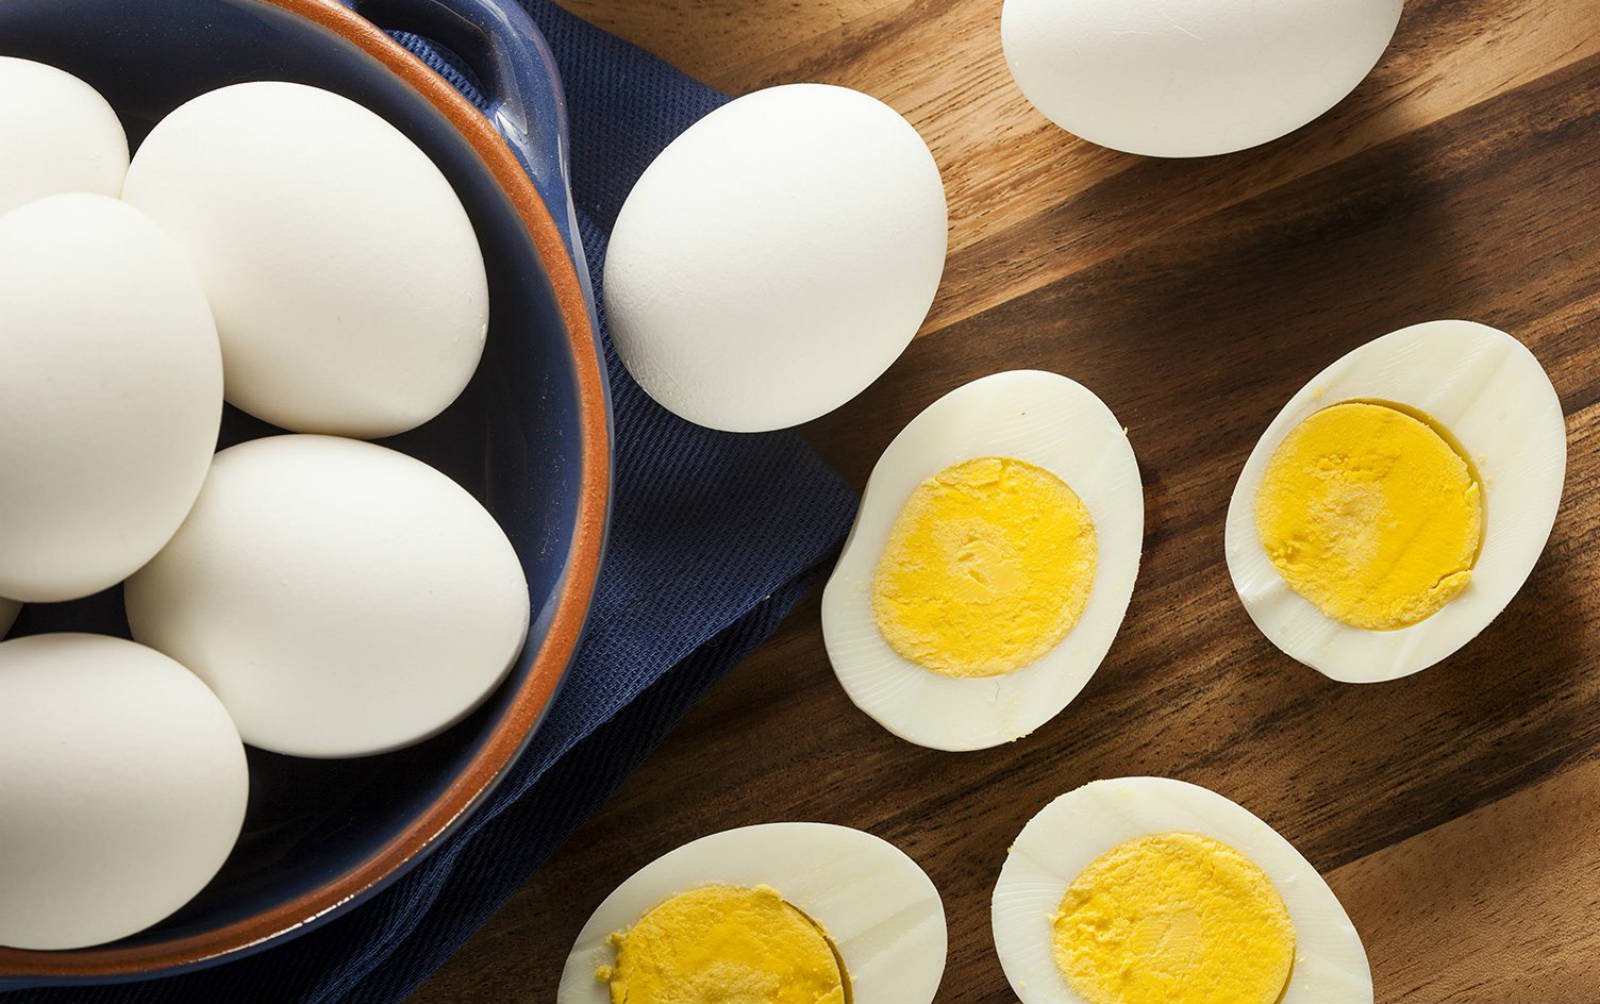 7 Manfaat Telur Ayam Kampung, Benarkah Lebih Sehat? | Hello Sehat